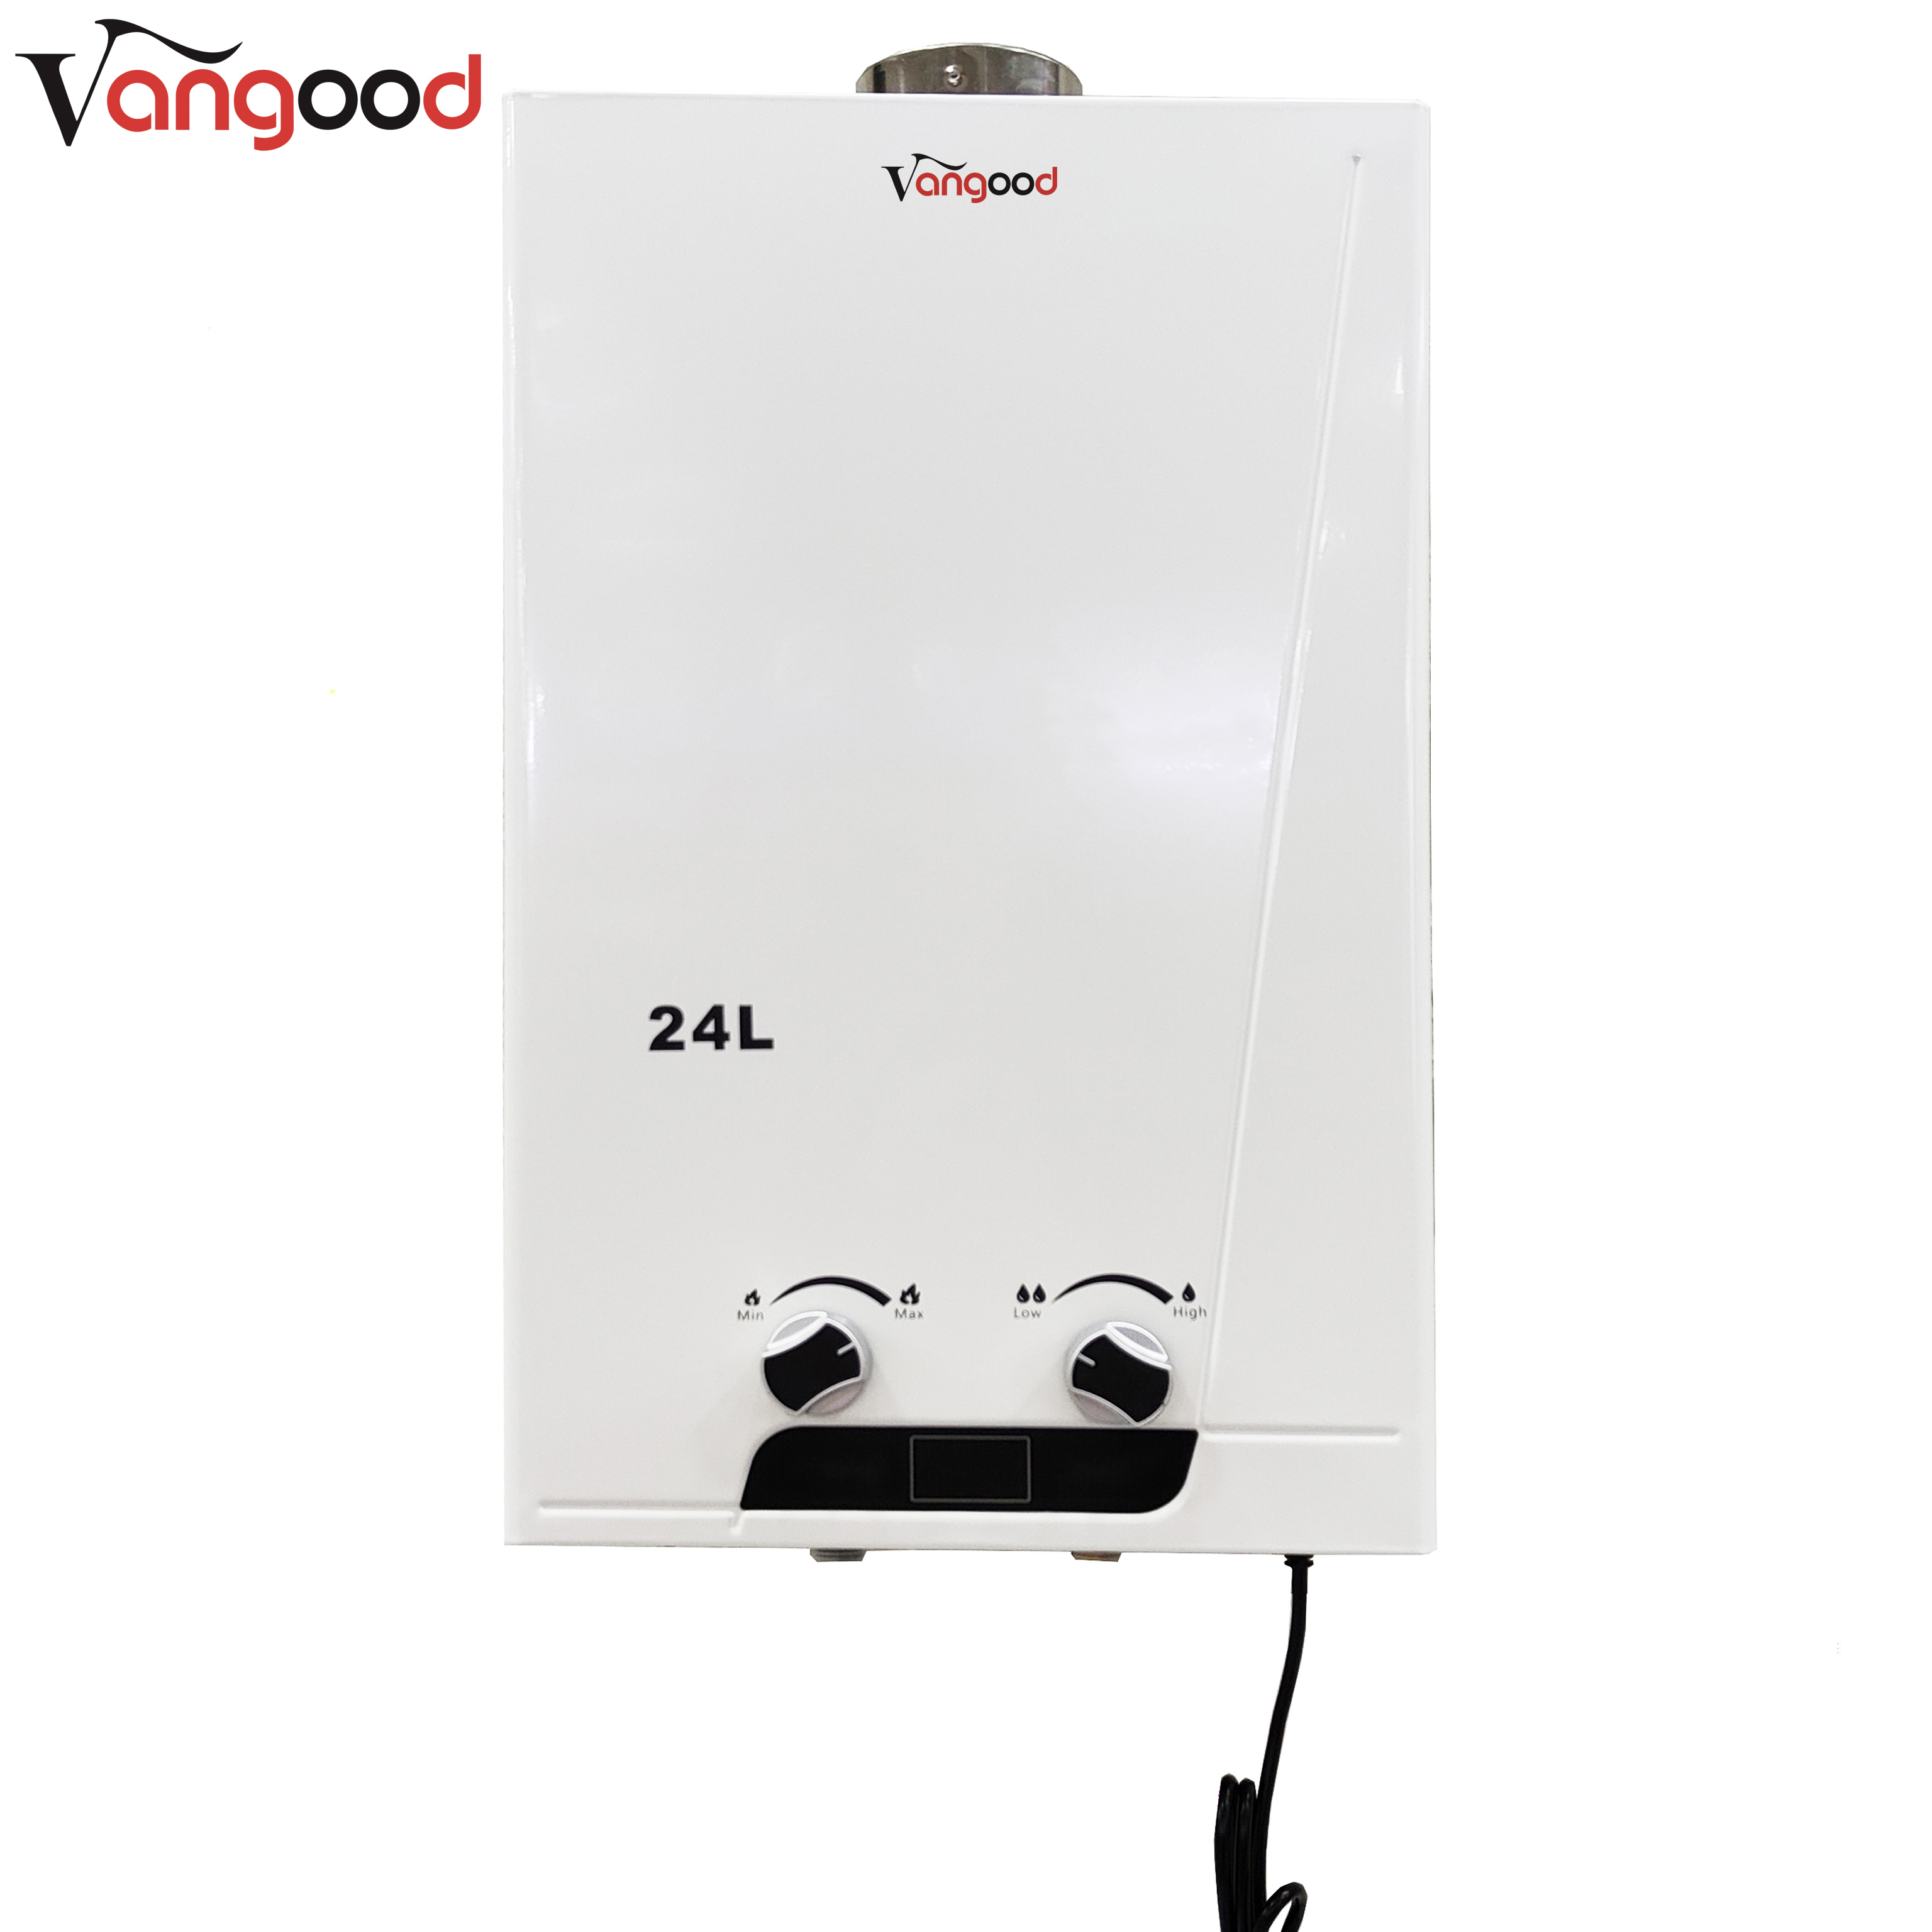 24L gas water heater